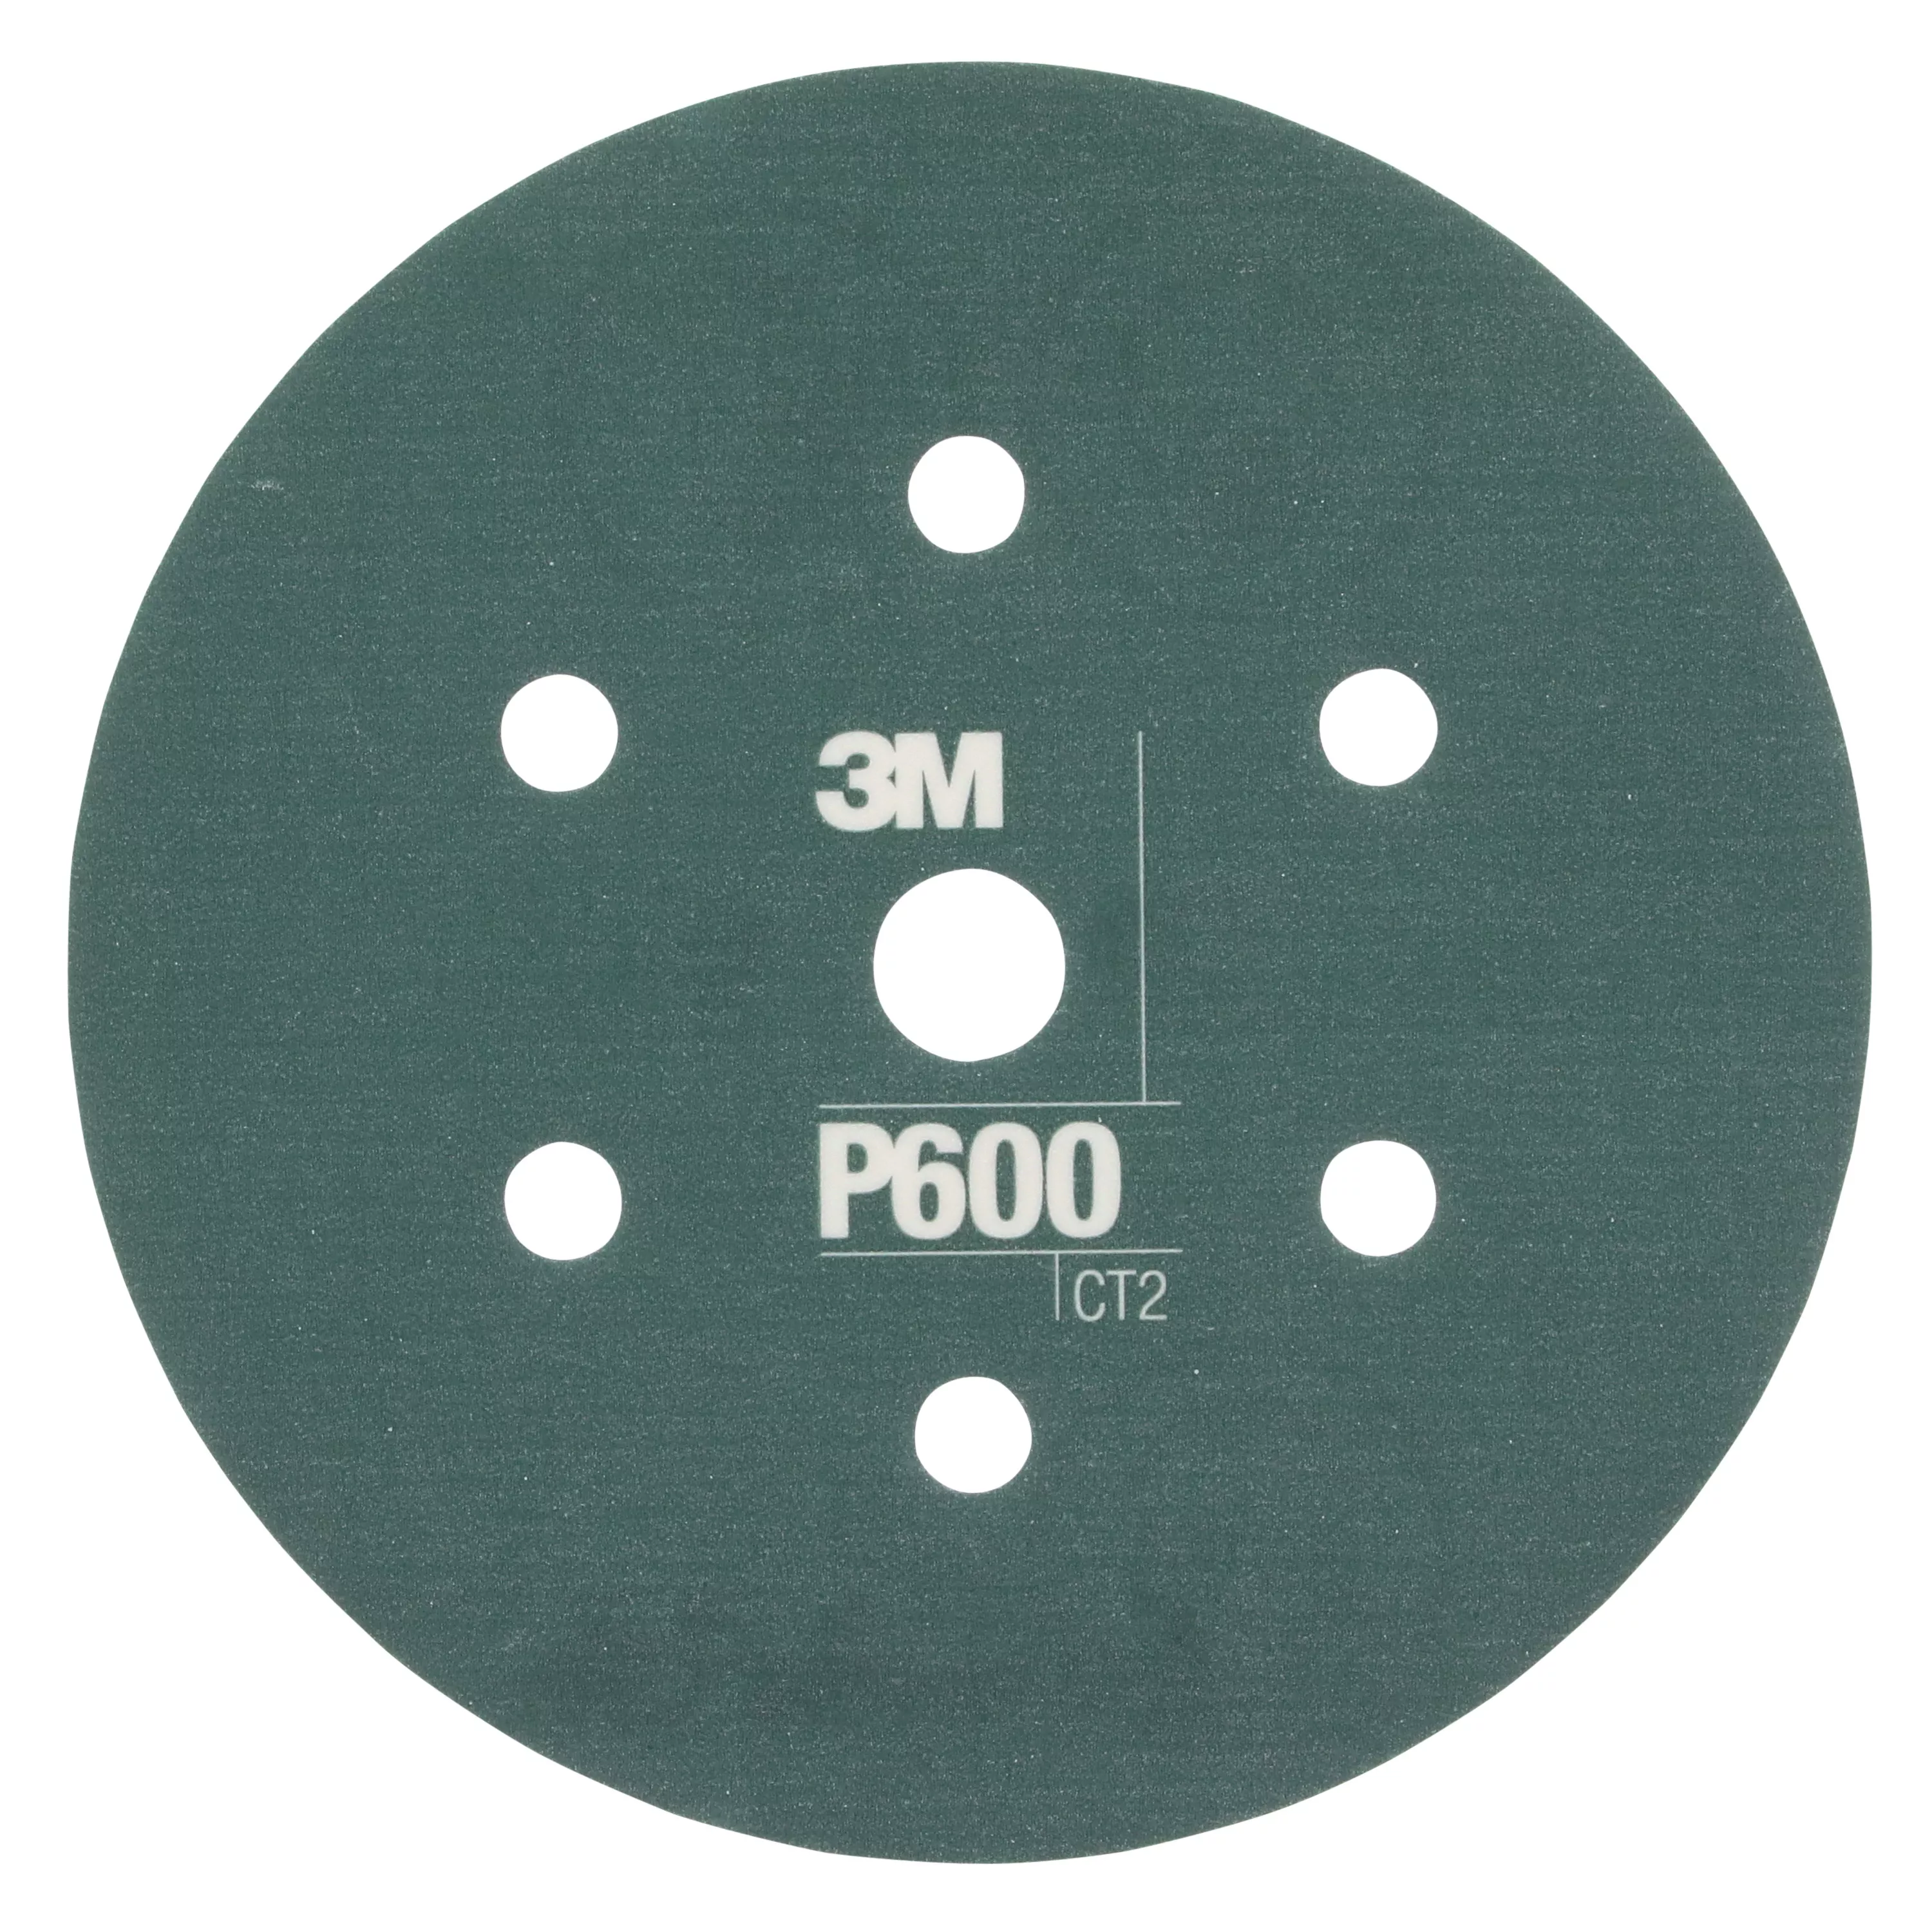 3M™ Hookit™ Flexible Abrasive Disc 270J, 34405, 6 in, Dust Free, P600,
25 disc per carton, 5 cartons per case